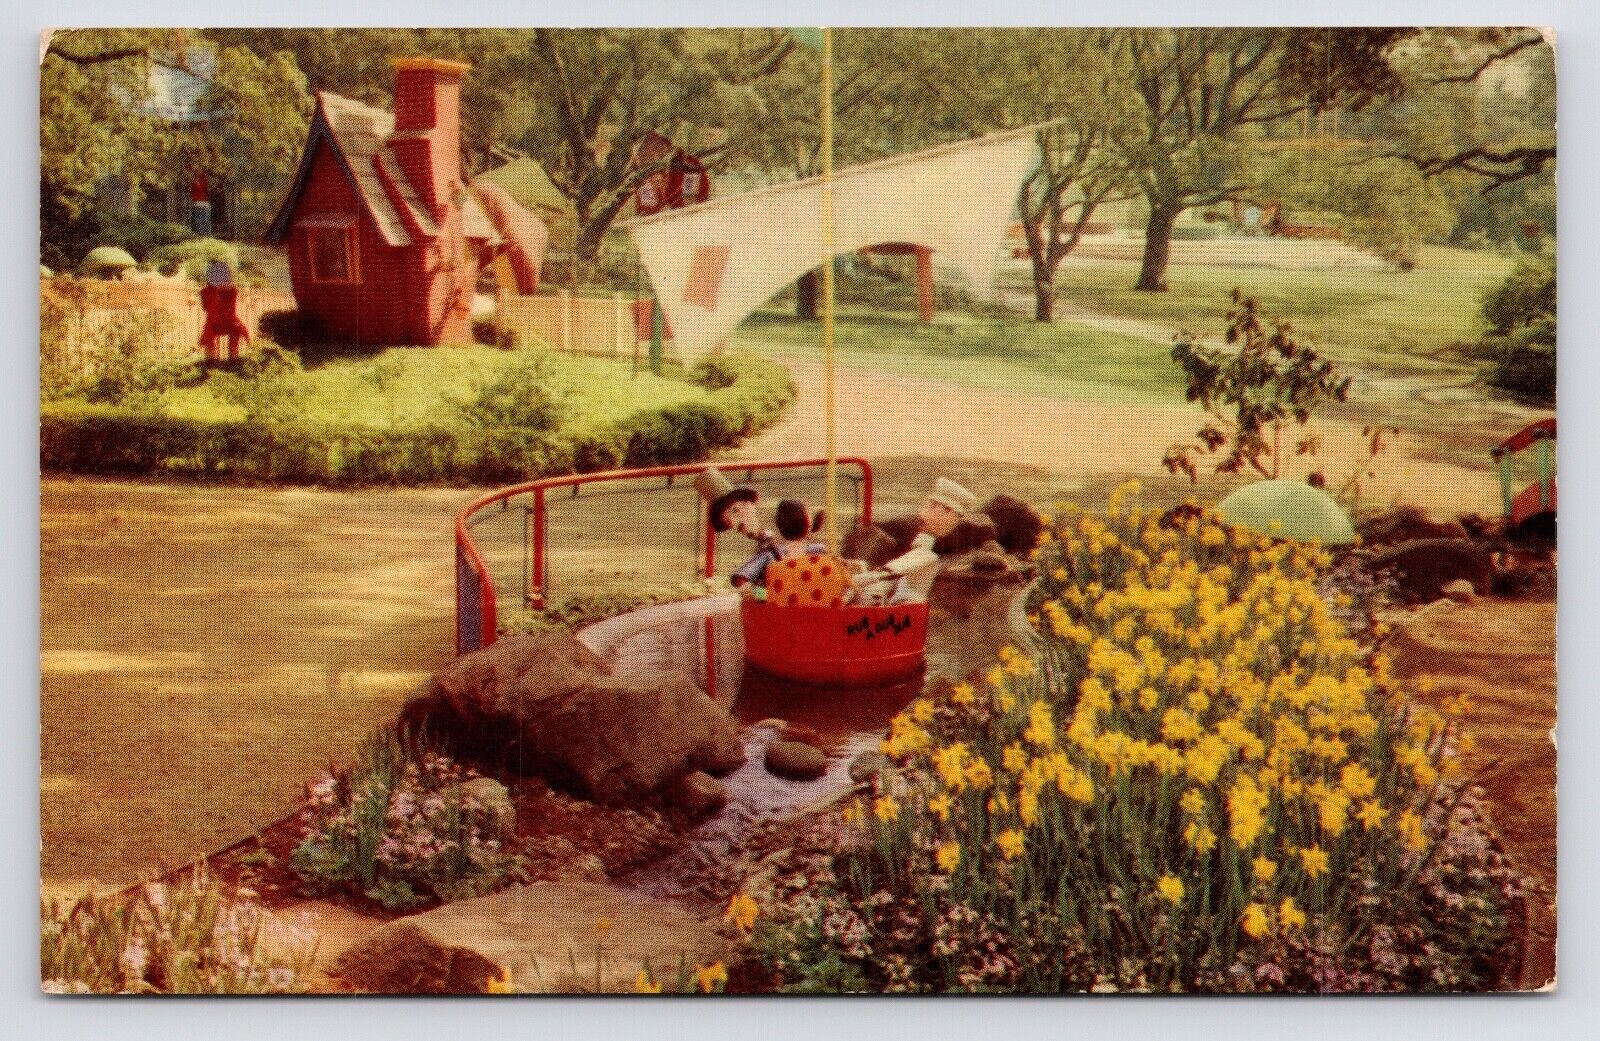 1950s~Childrens Fairyland~Theme Park~Rub-A-Dub-Dub~Oakland CA~VTG Postcard